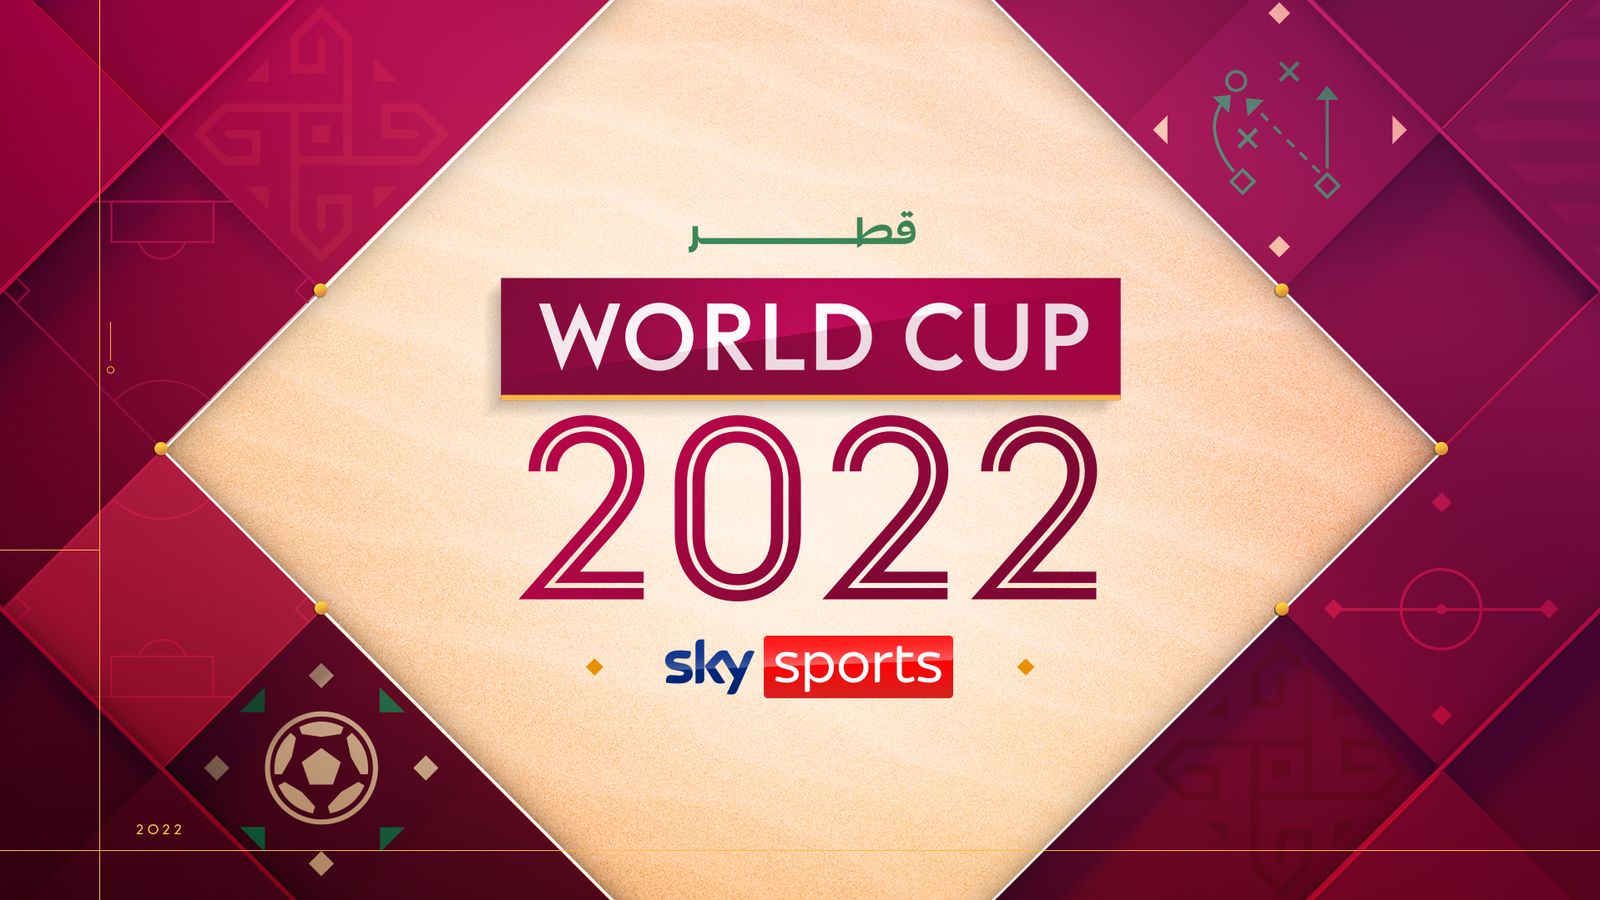 World Cup 2022: Bayern Munich, Barcelona and Manchester City dominate squads in Qatar